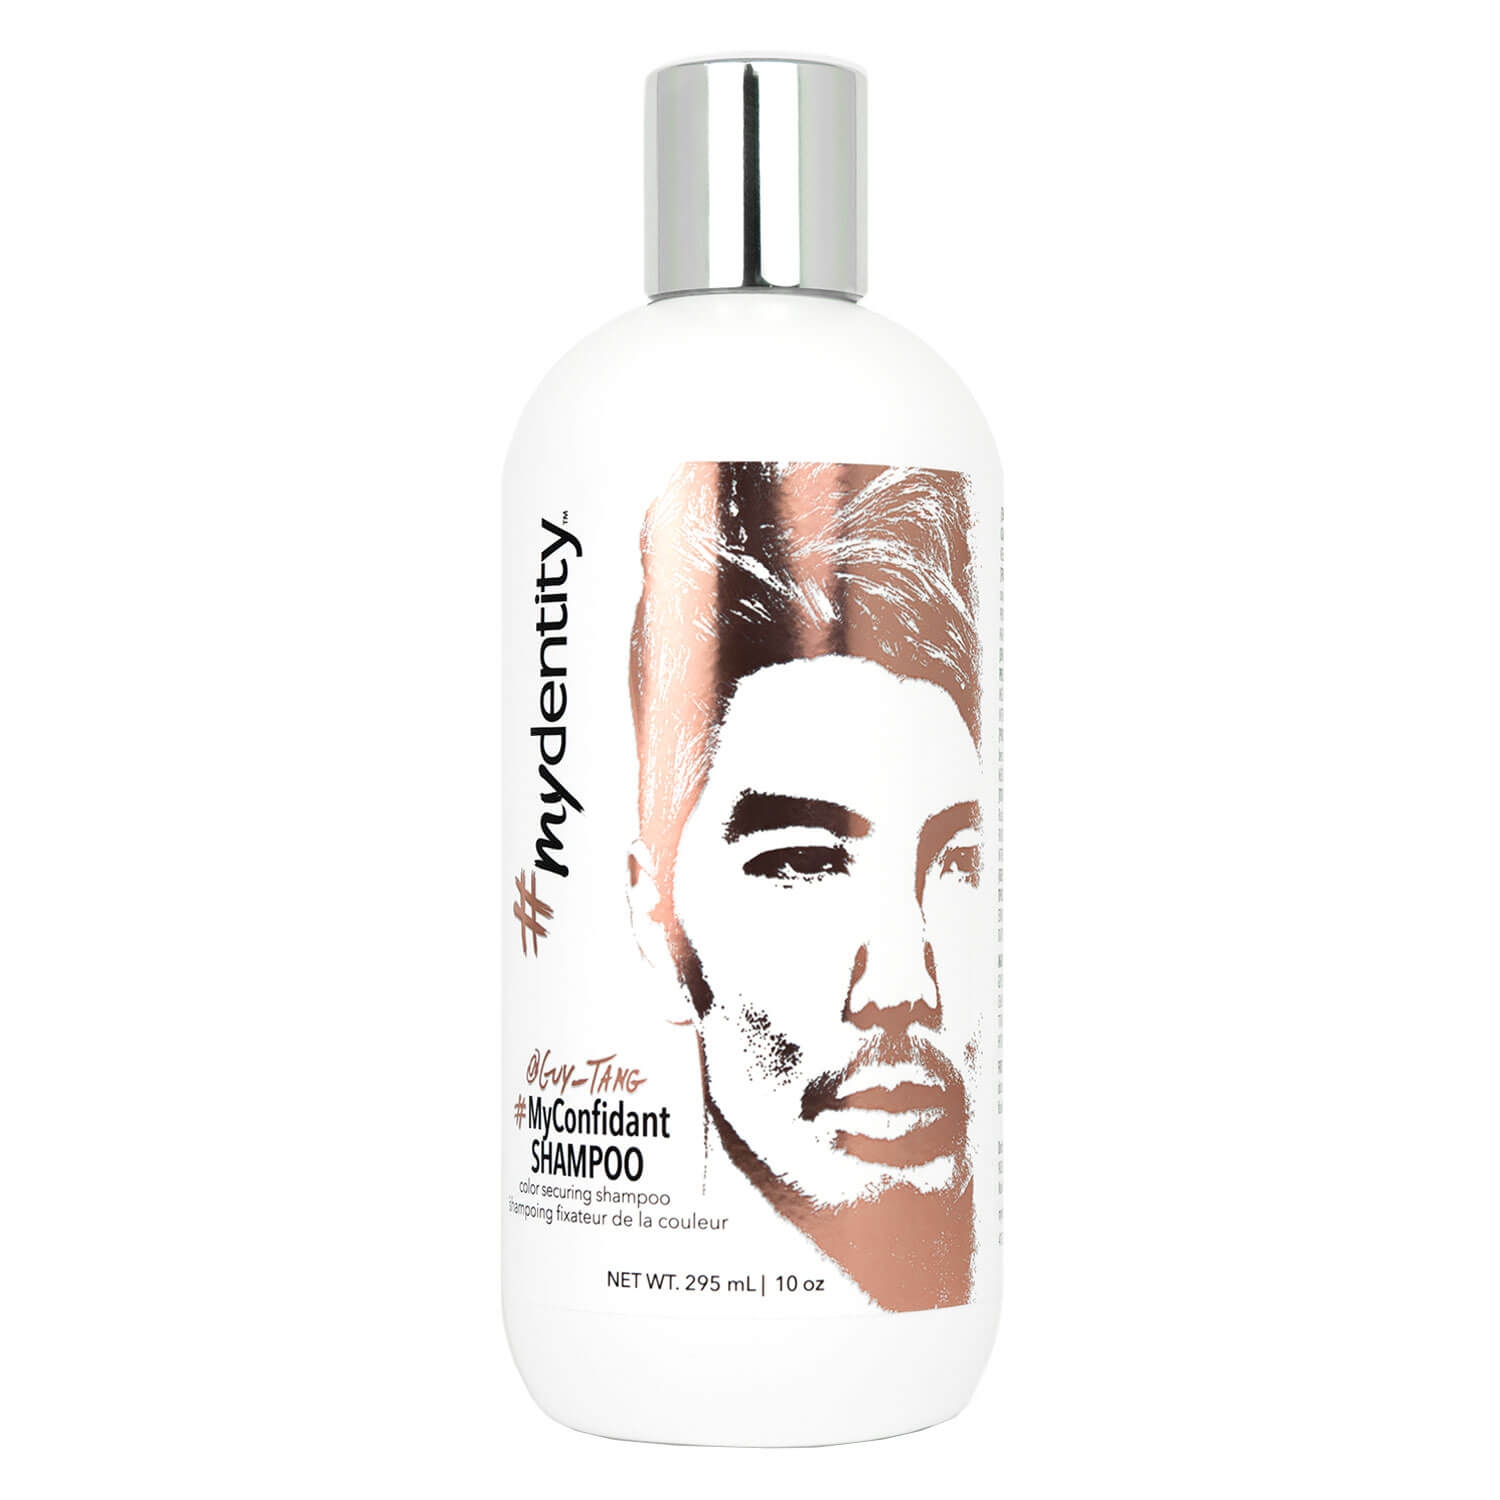 Produktbild von mydentity Care - #MyConfidant Shampoo